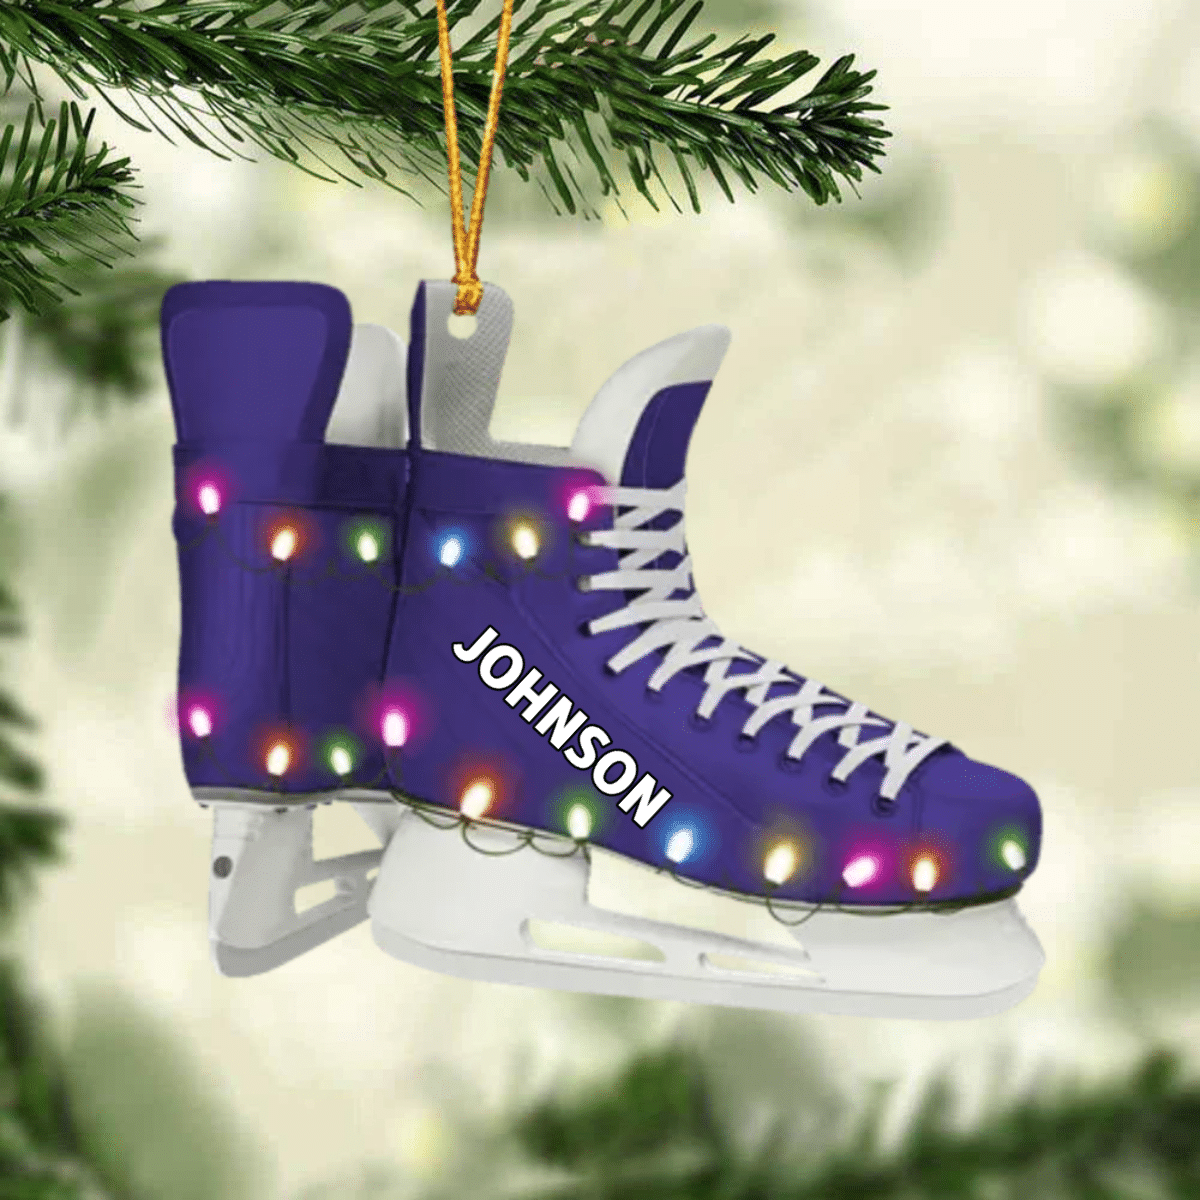 Ice Hockey Skates - Personalized Hockey Acrylic Christmas Ornament - Gift For Hockey Players